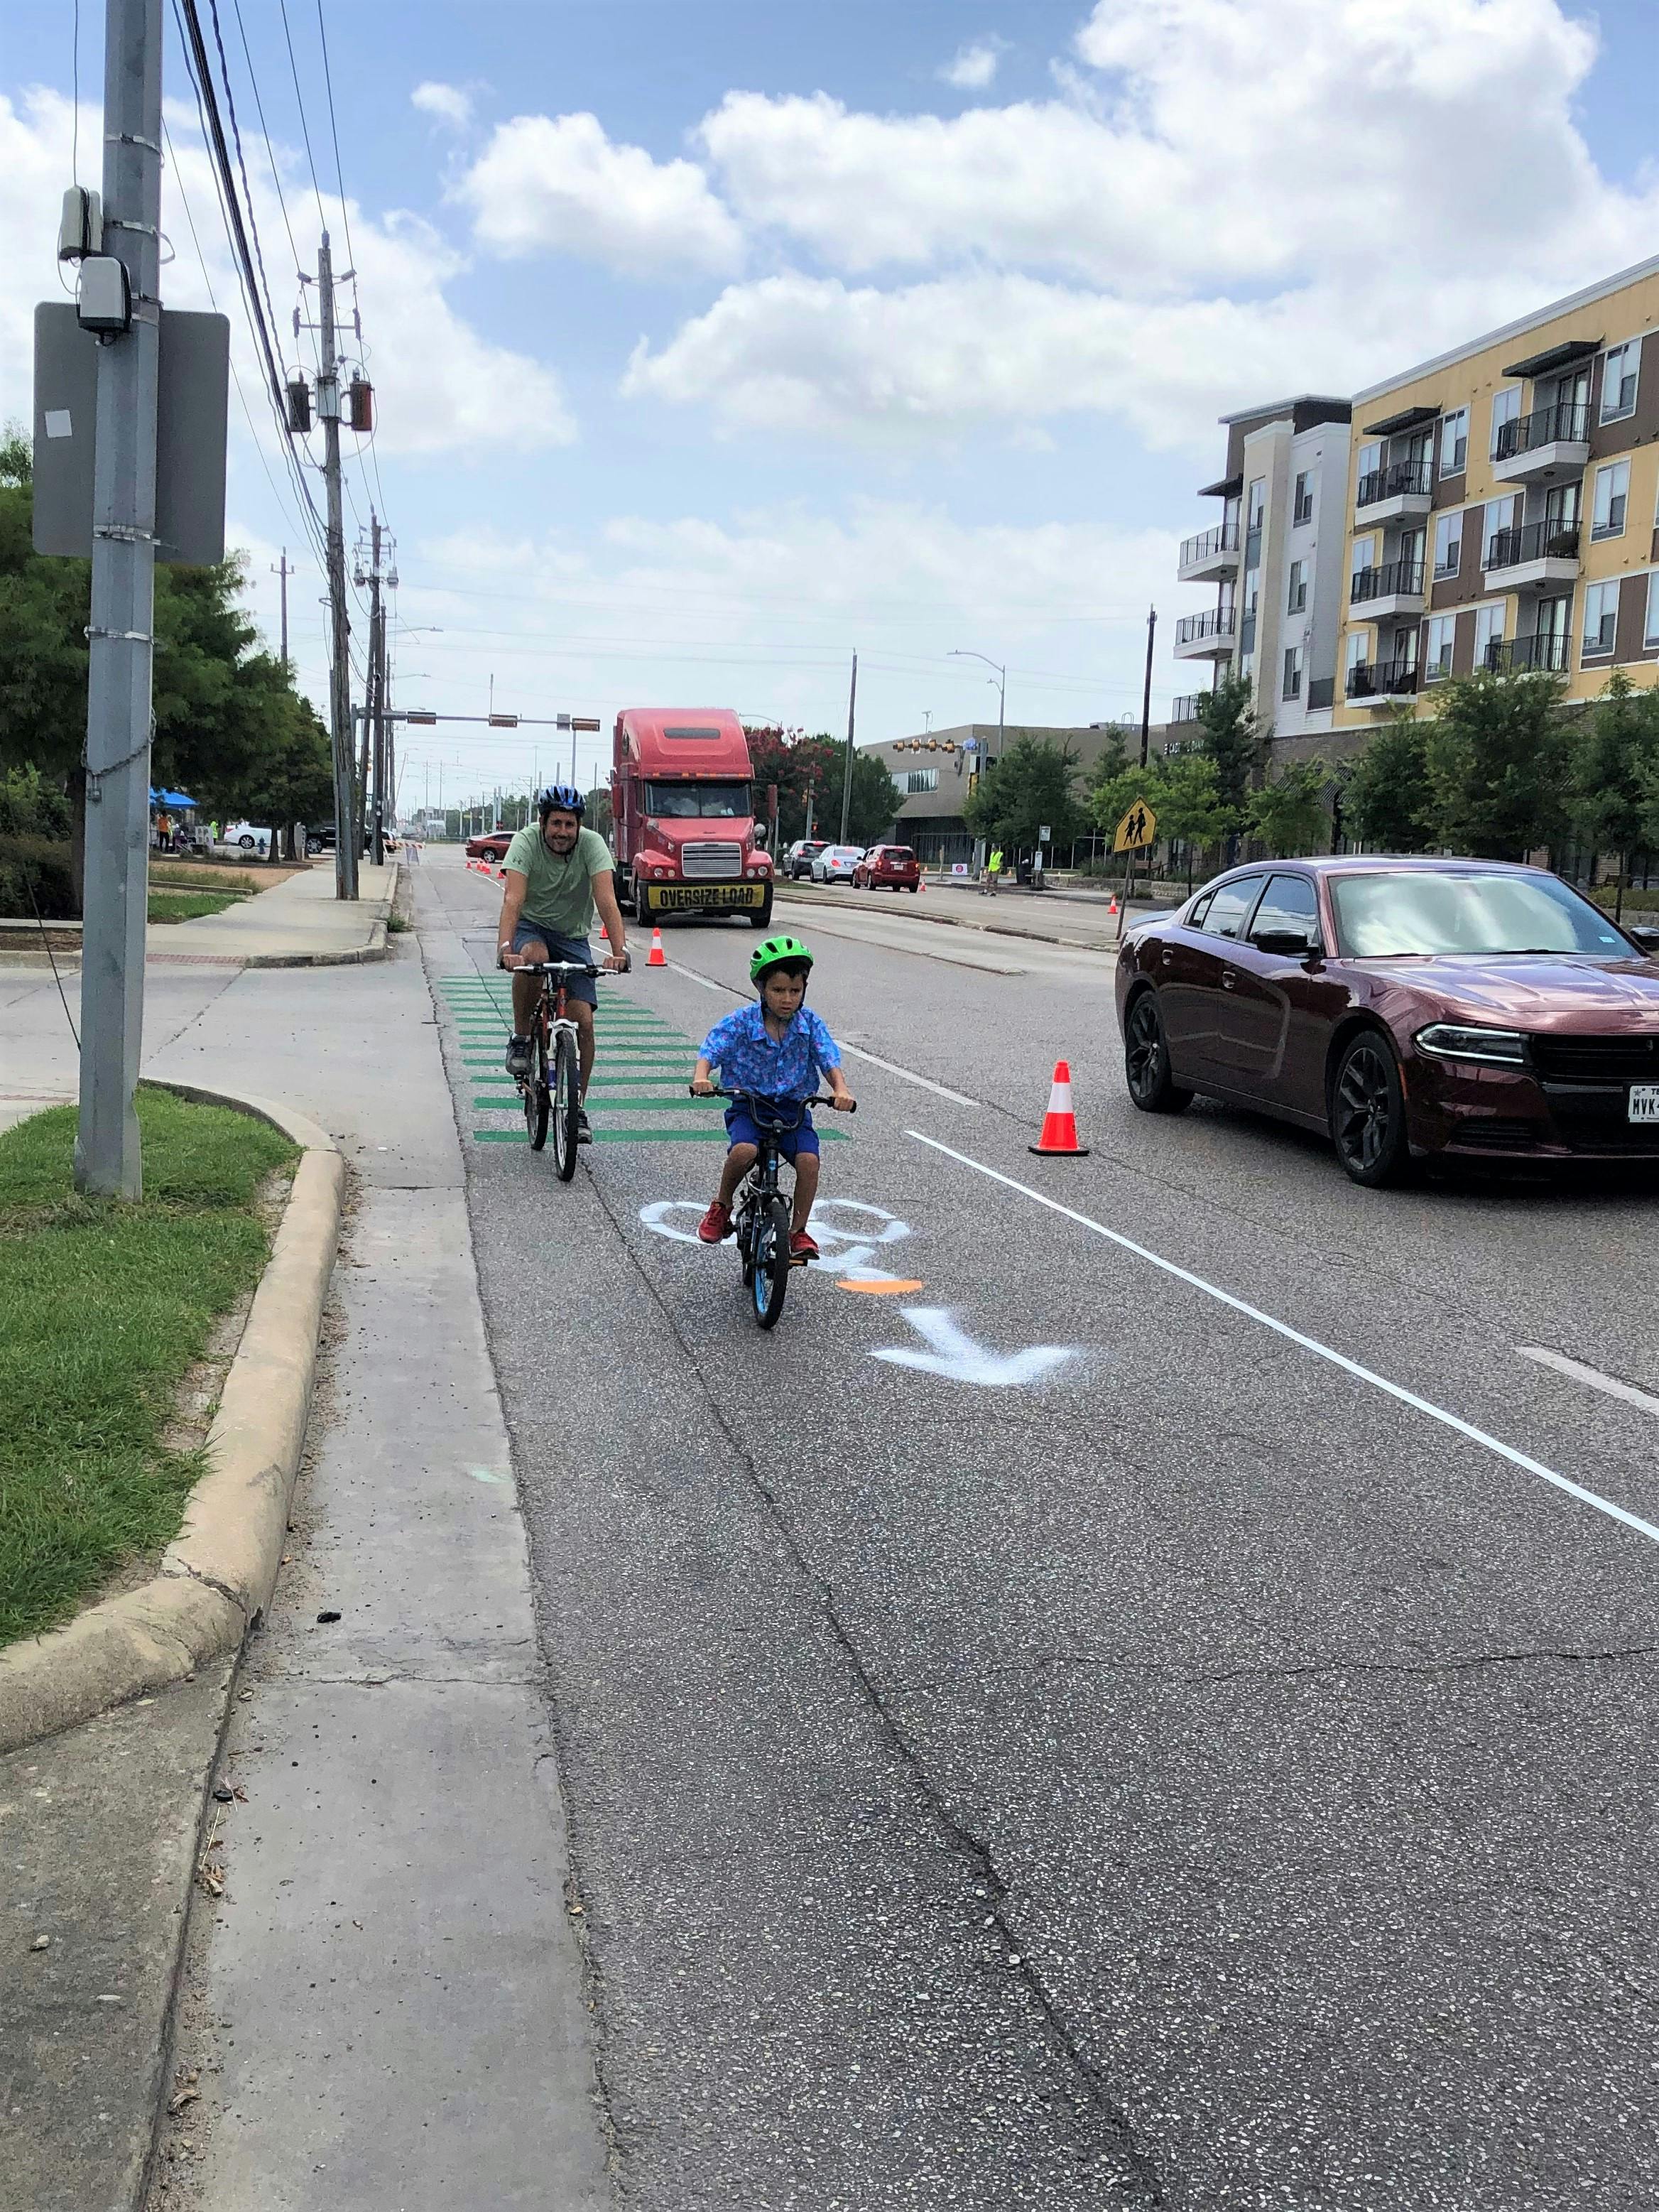 Pop Up Bike Lane Adult With Child